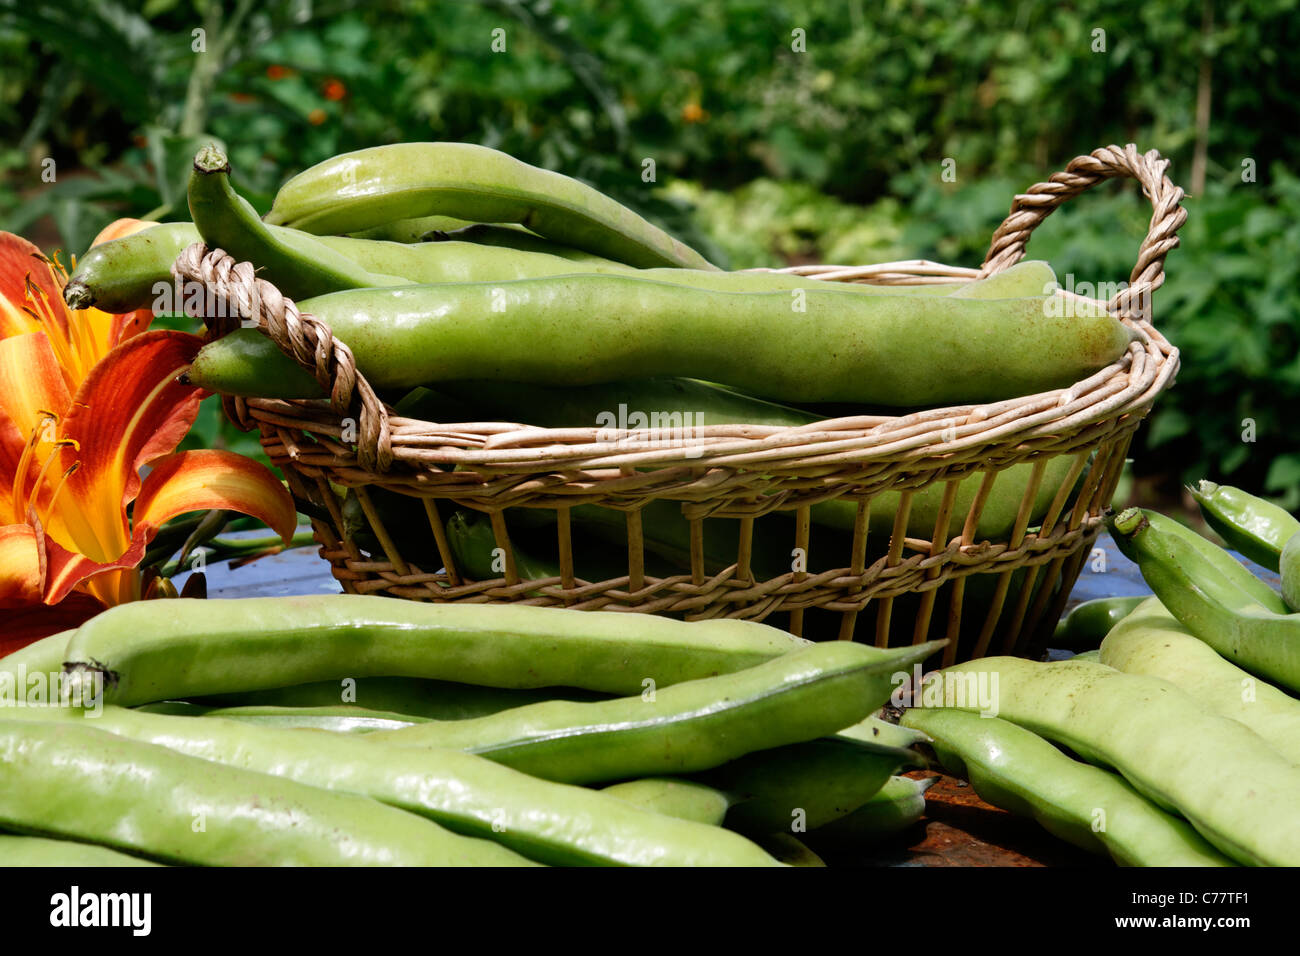 Harvested fava beans (Vicia faba). Stock Photo